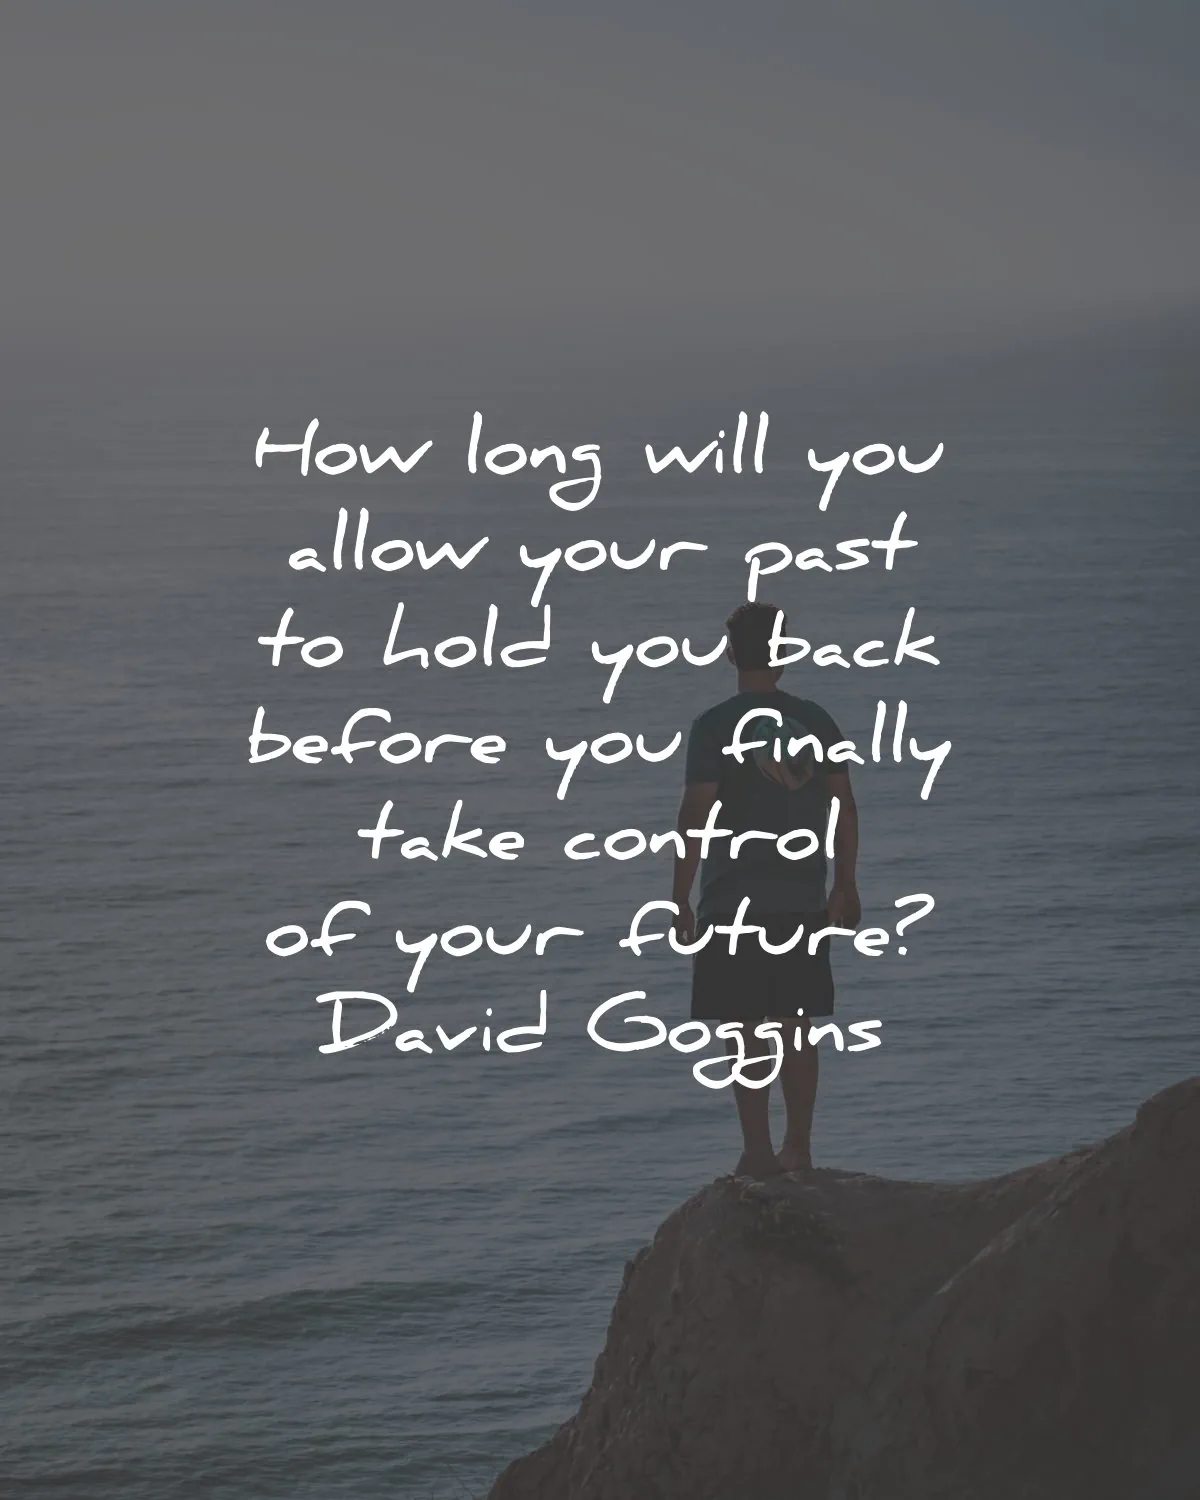 david goggins quotes long hold you back control future wisdom